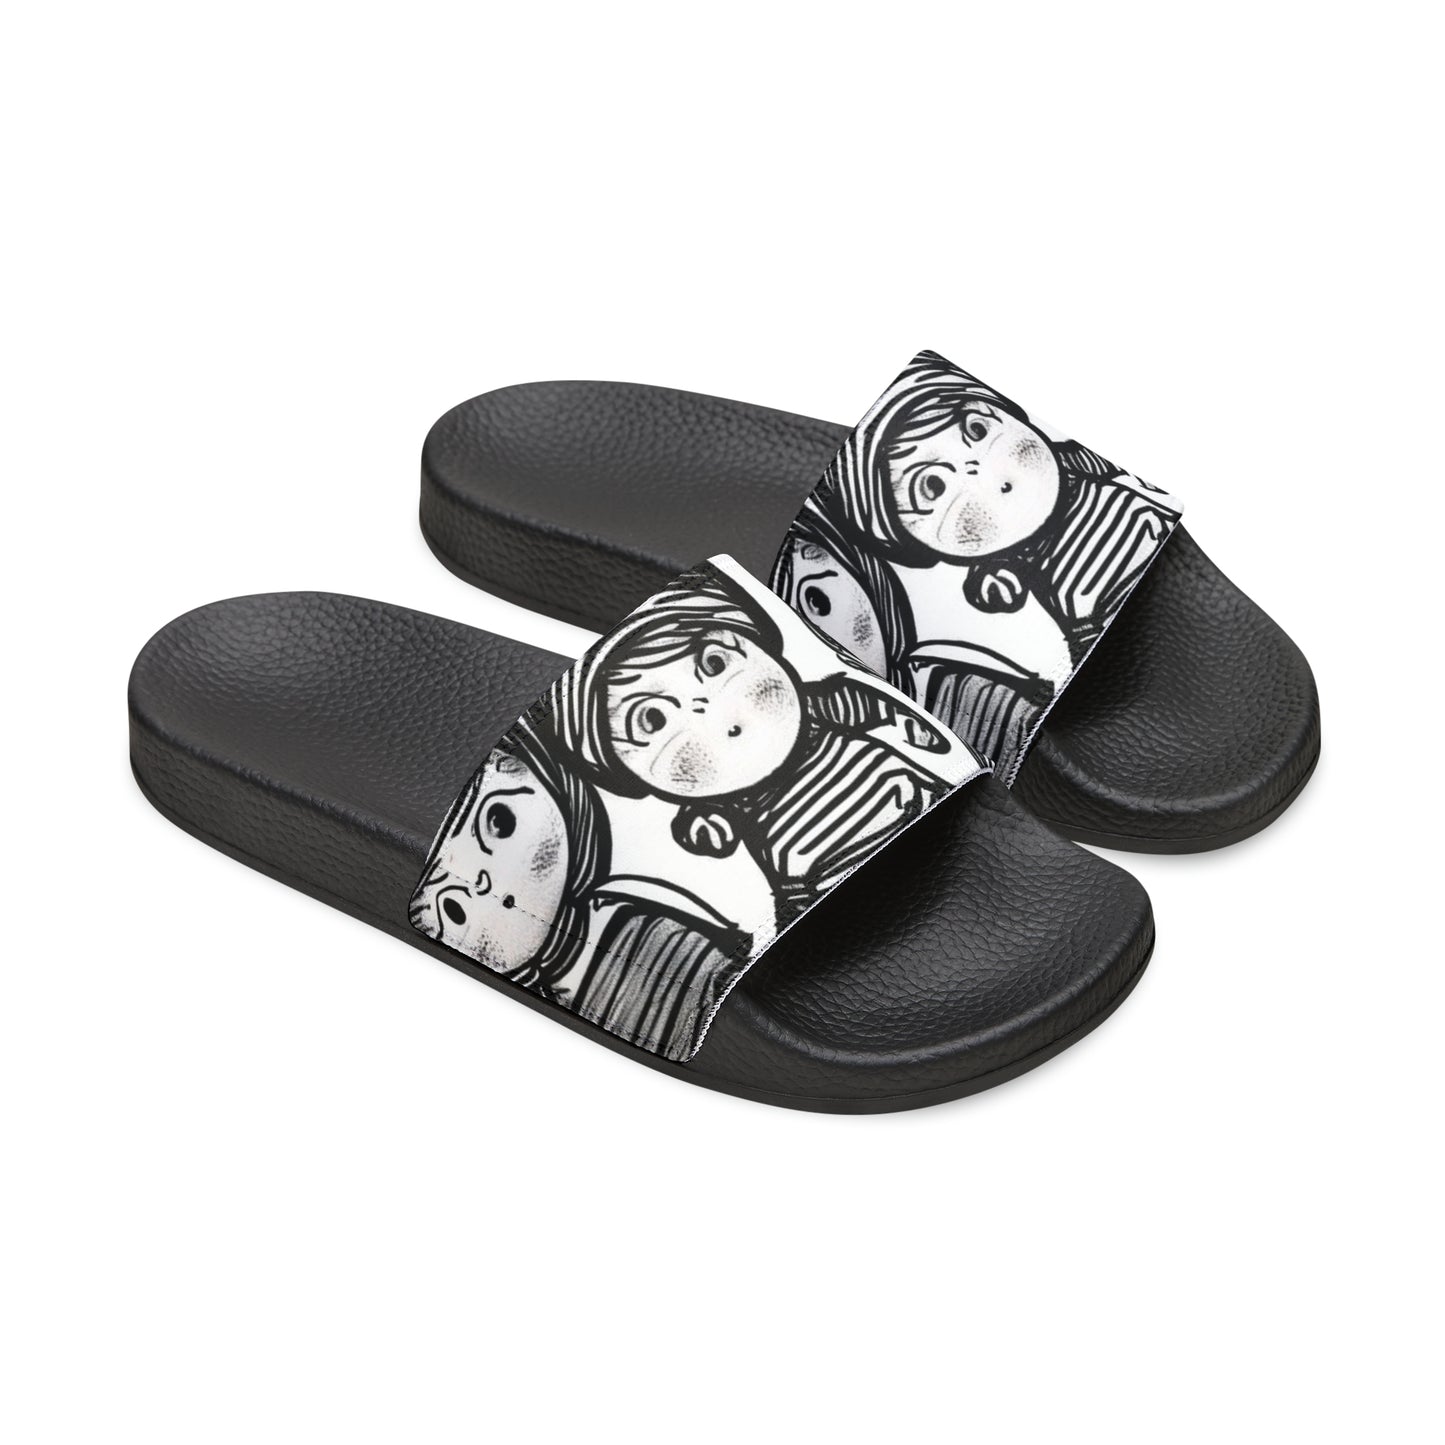 AshleighsCloset's "Tiny Tribe" Slide Sandals